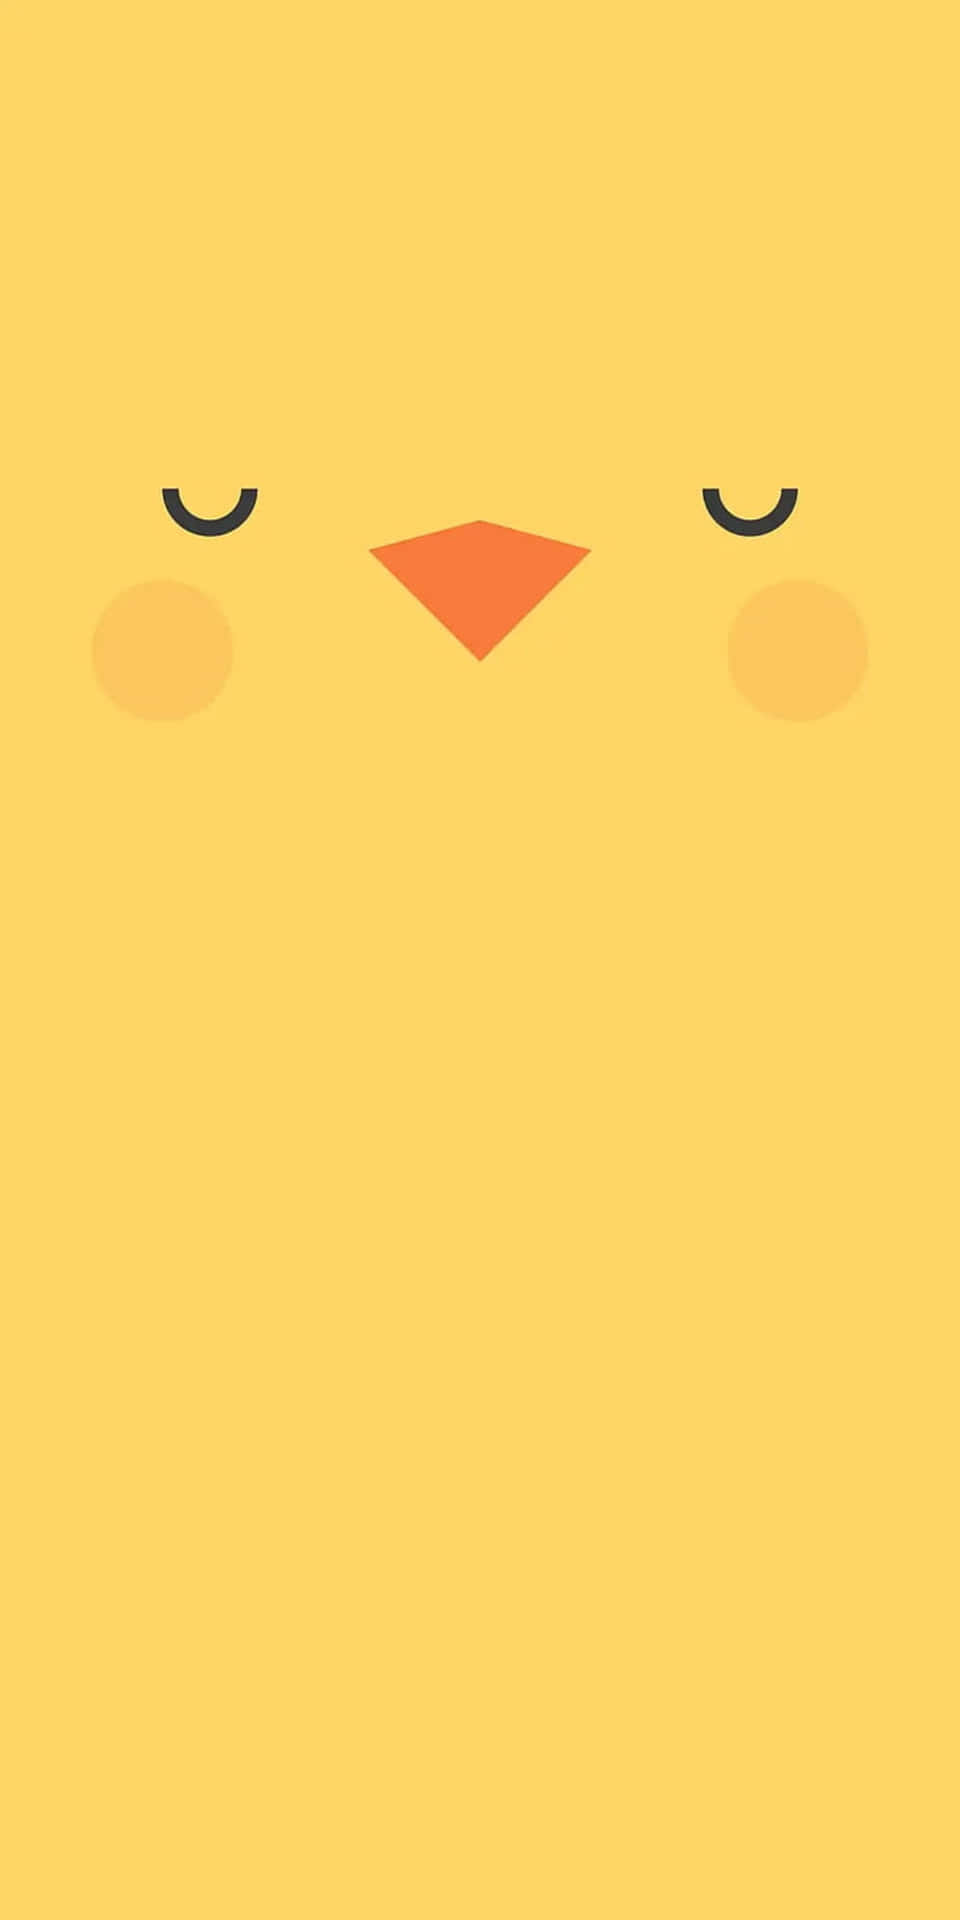 Pixel 3 Minimal Background Yellow Chick Sleeping